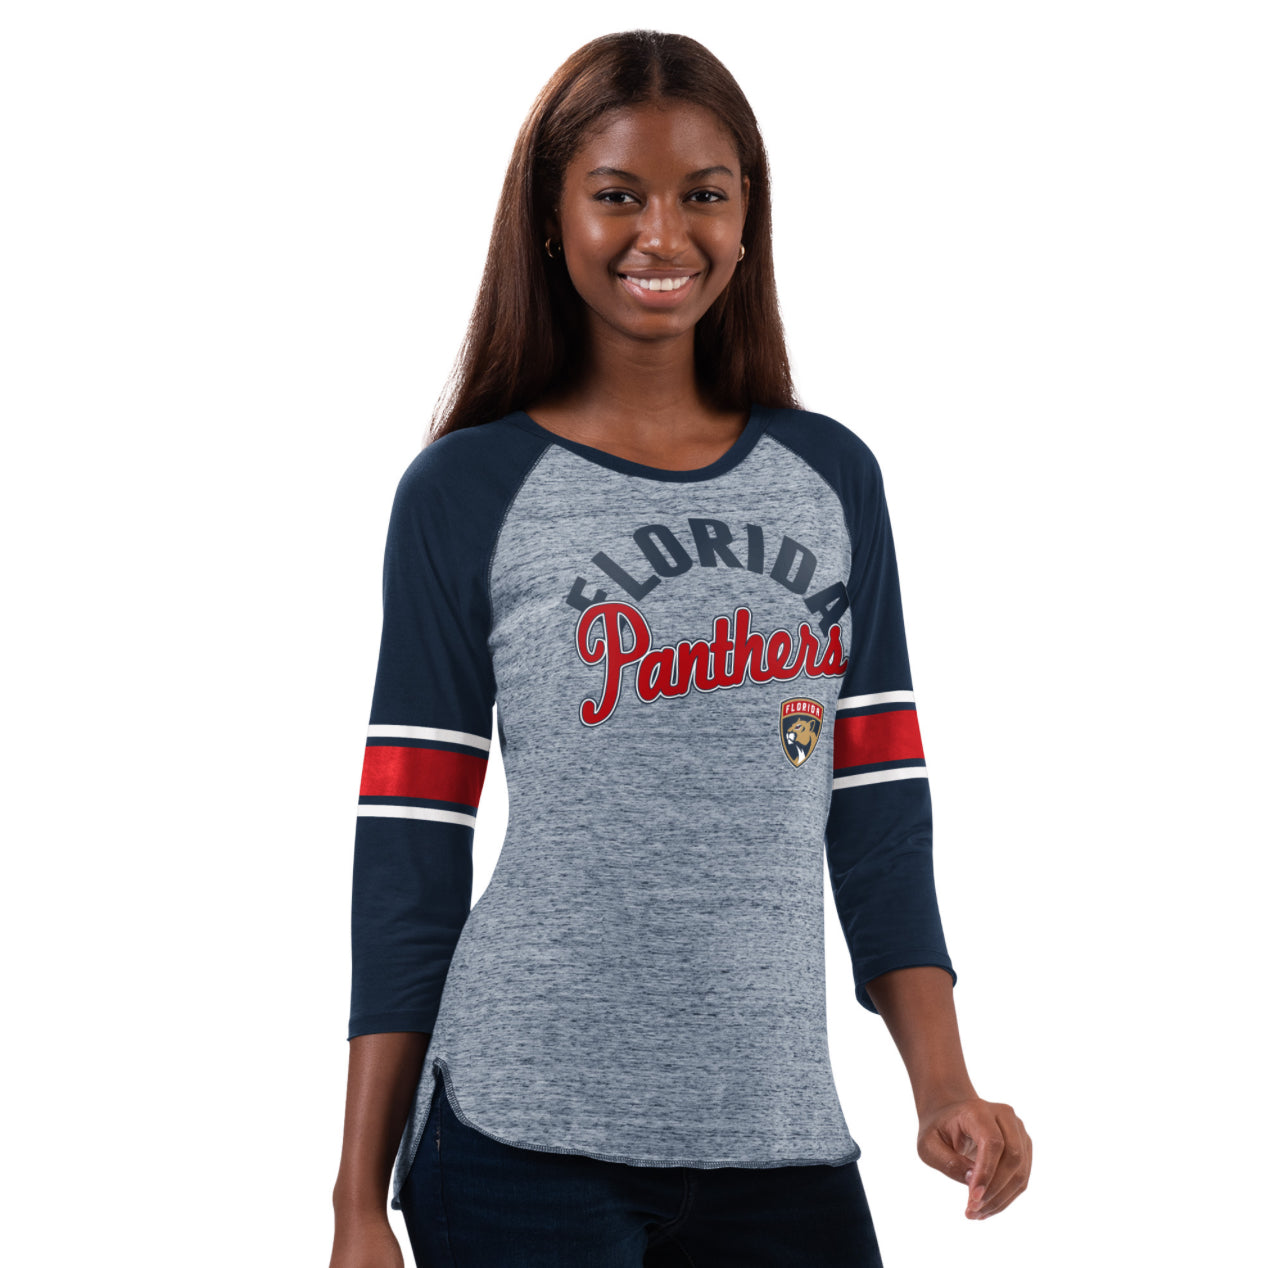 Florida Panthers Glll 4Her 3/4 Sleeve Women's Shirt